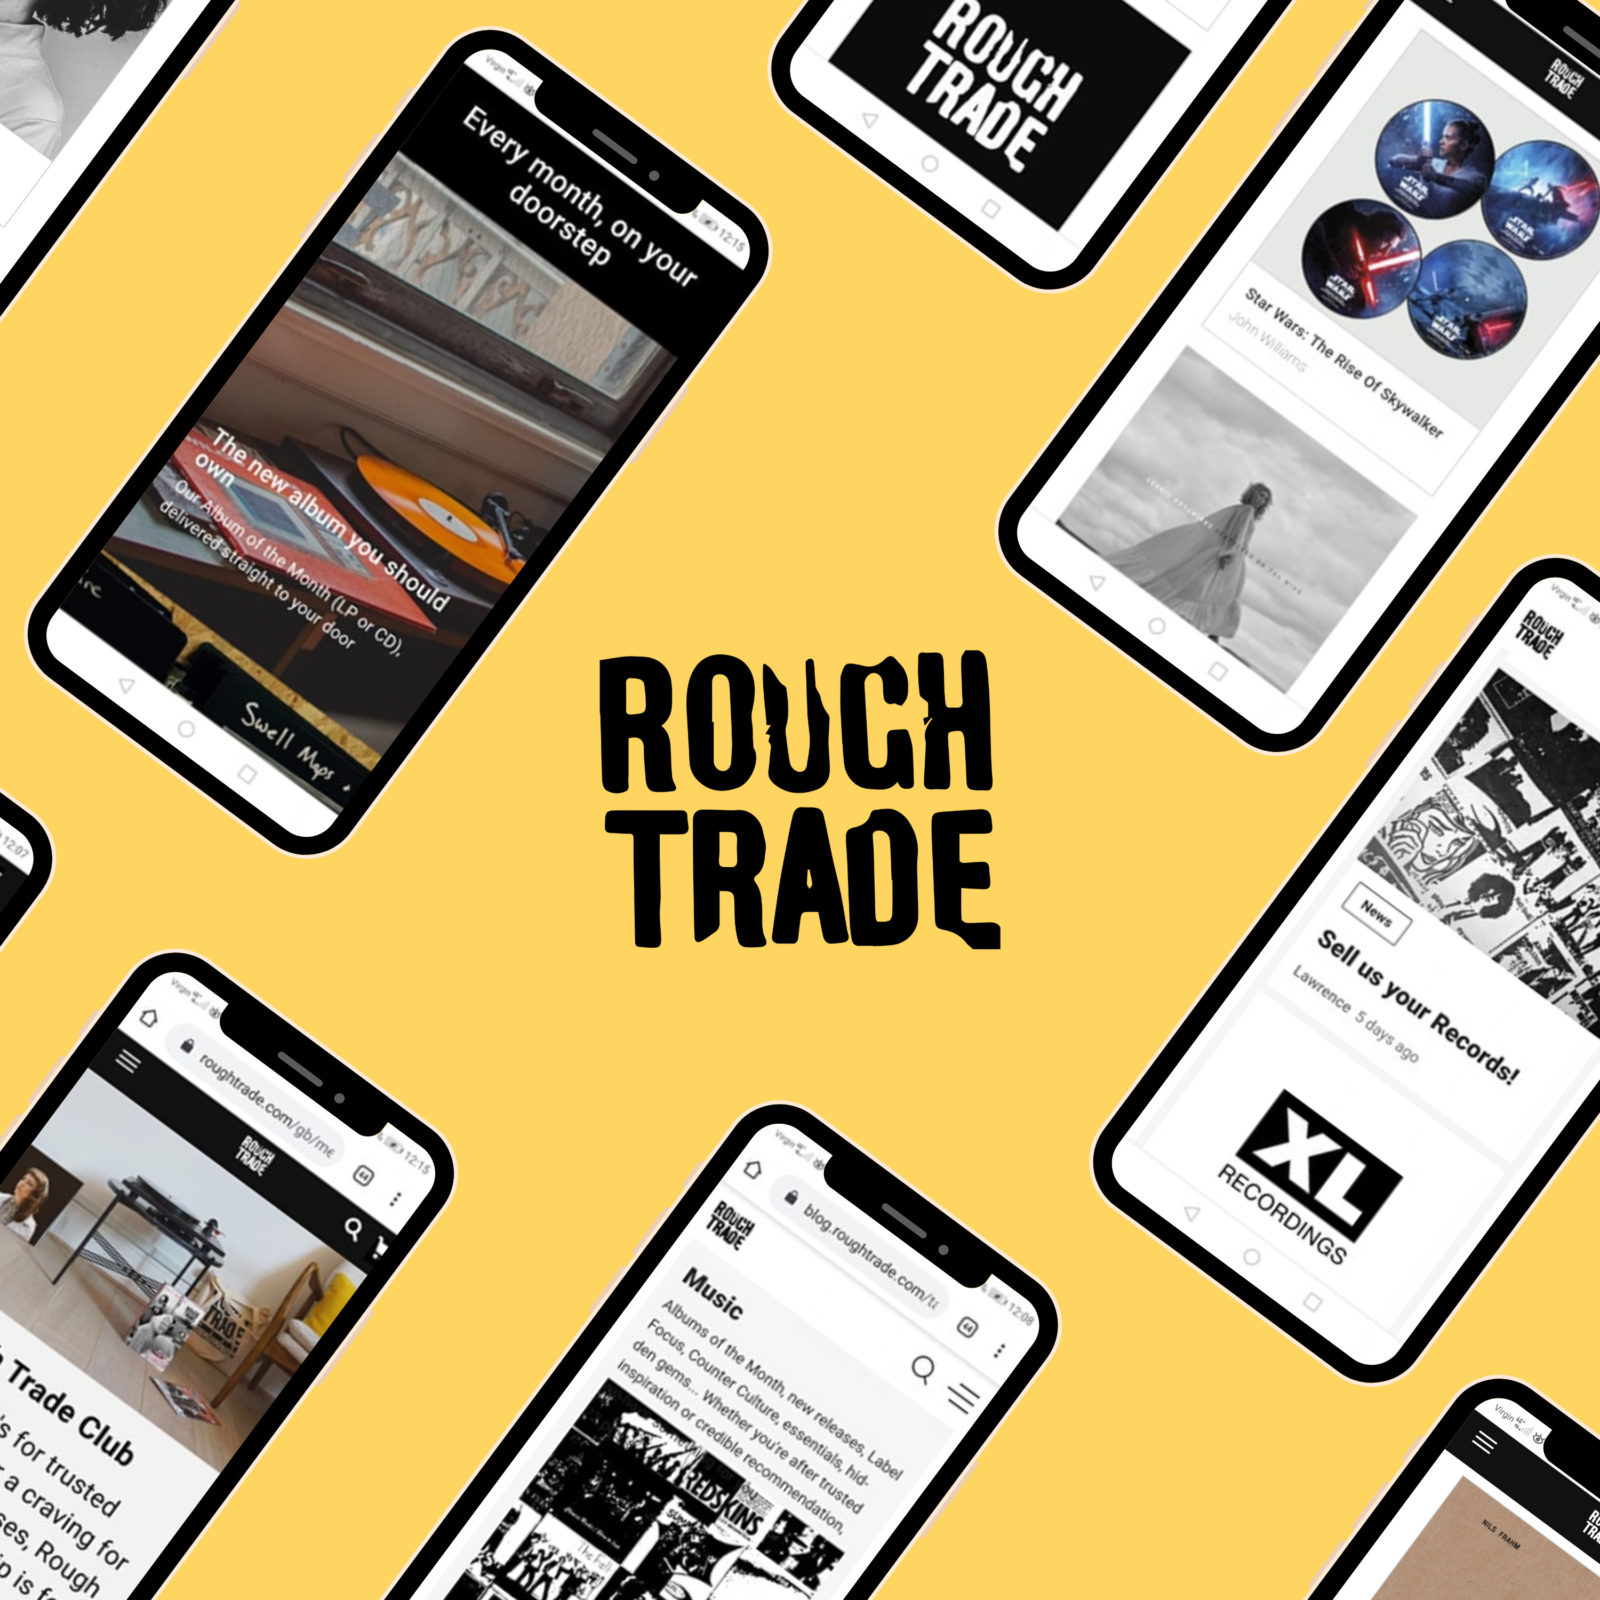 Rough Trade on phones around logo